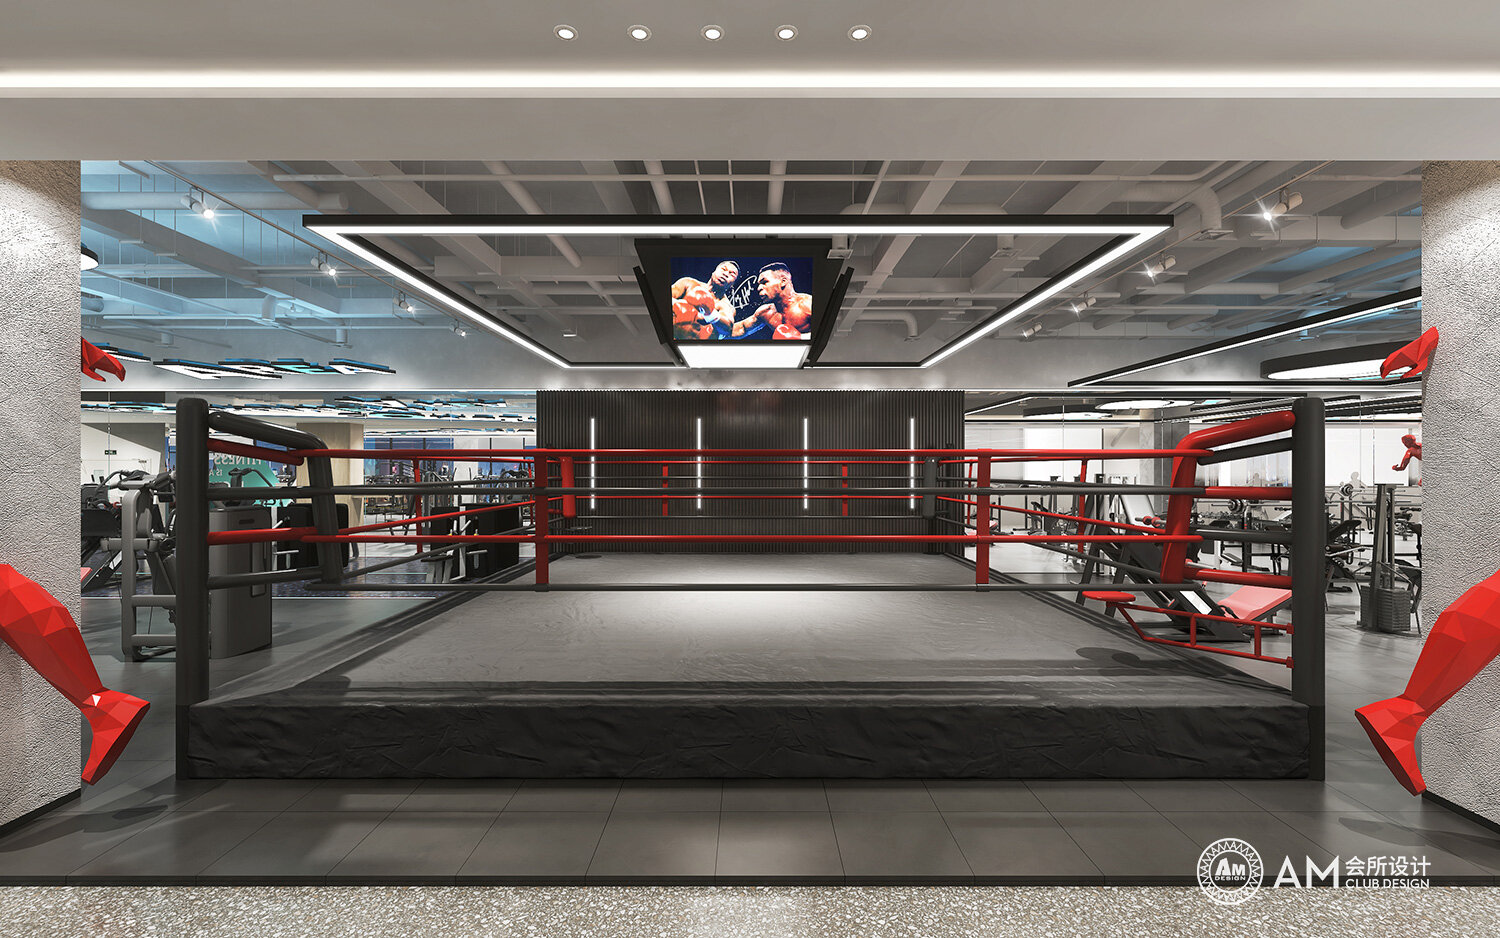 AM DESIGN | Boxing area design of Hefei Gymnasium